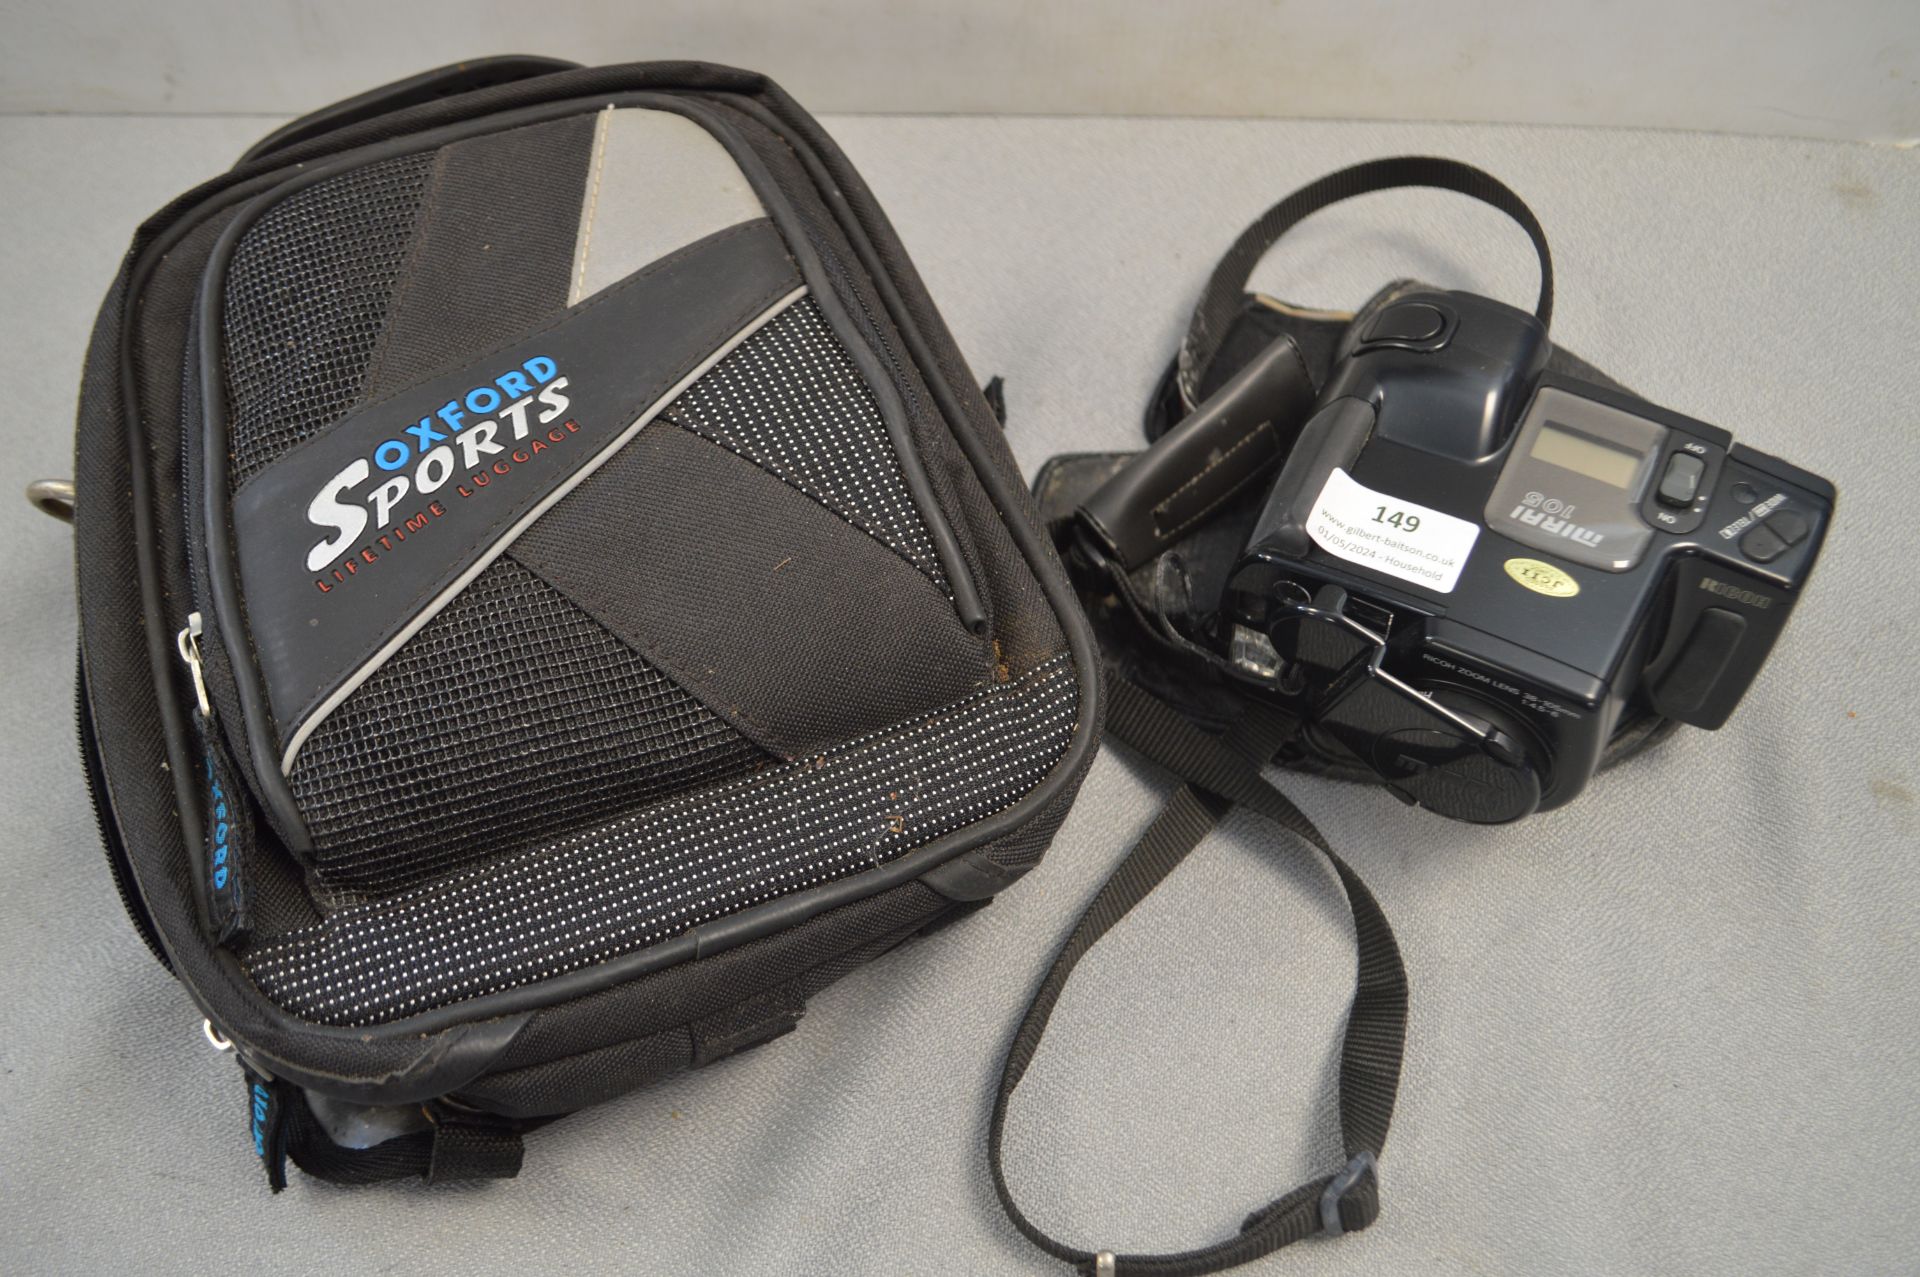 Ricoh Mirai 105 Camera, and a Oxford Sports Motorb